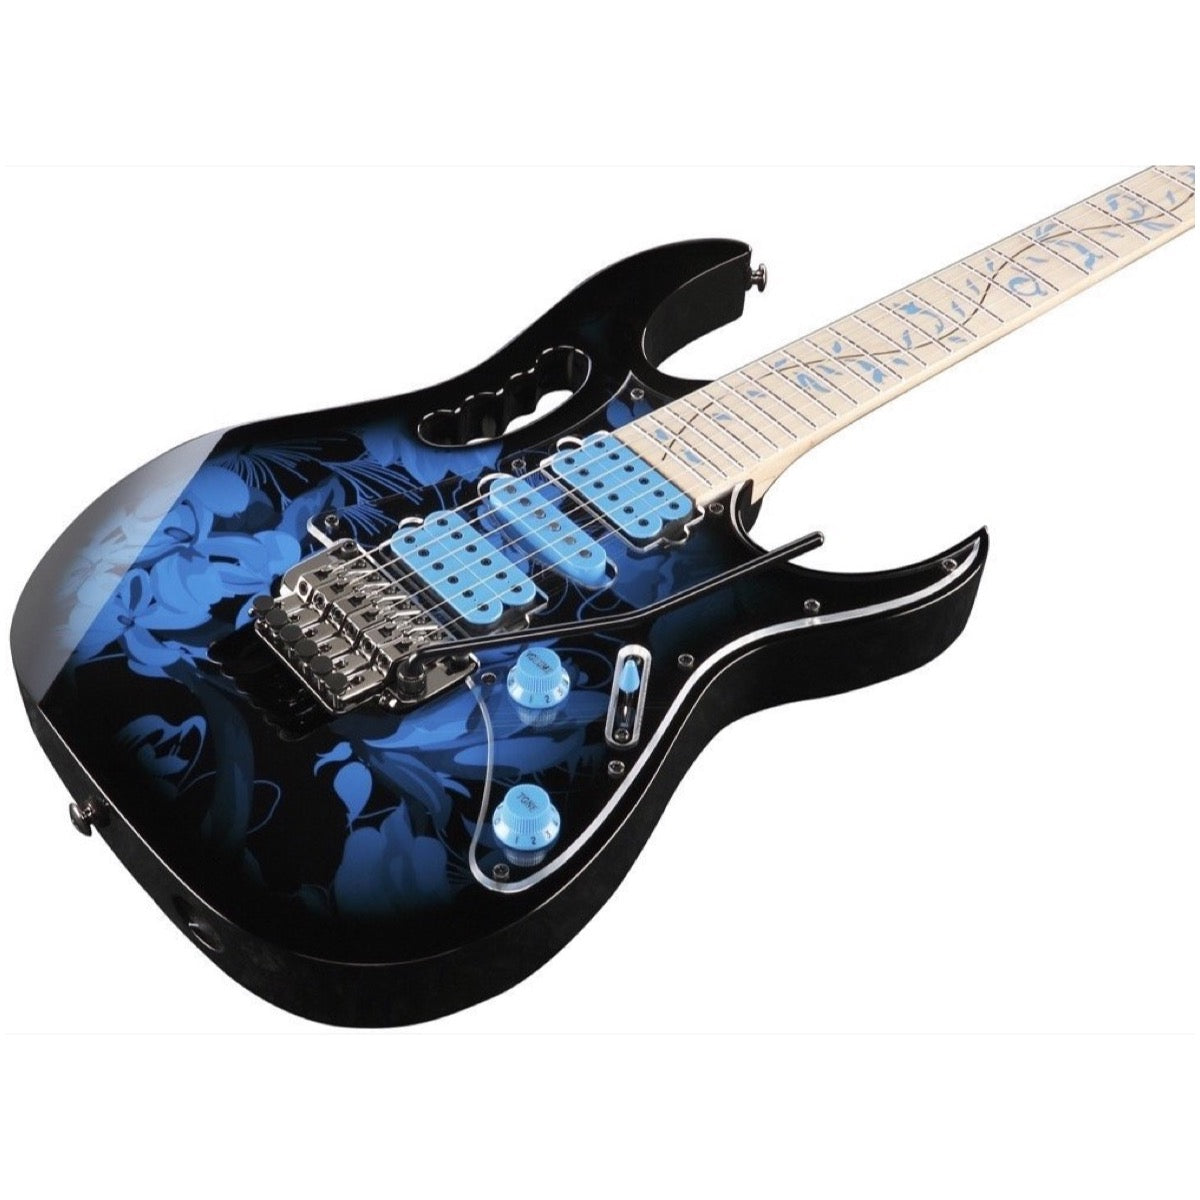 Ibanez JEM77P Electric Guitar (with Gig Bag), Blue Floral Pattern